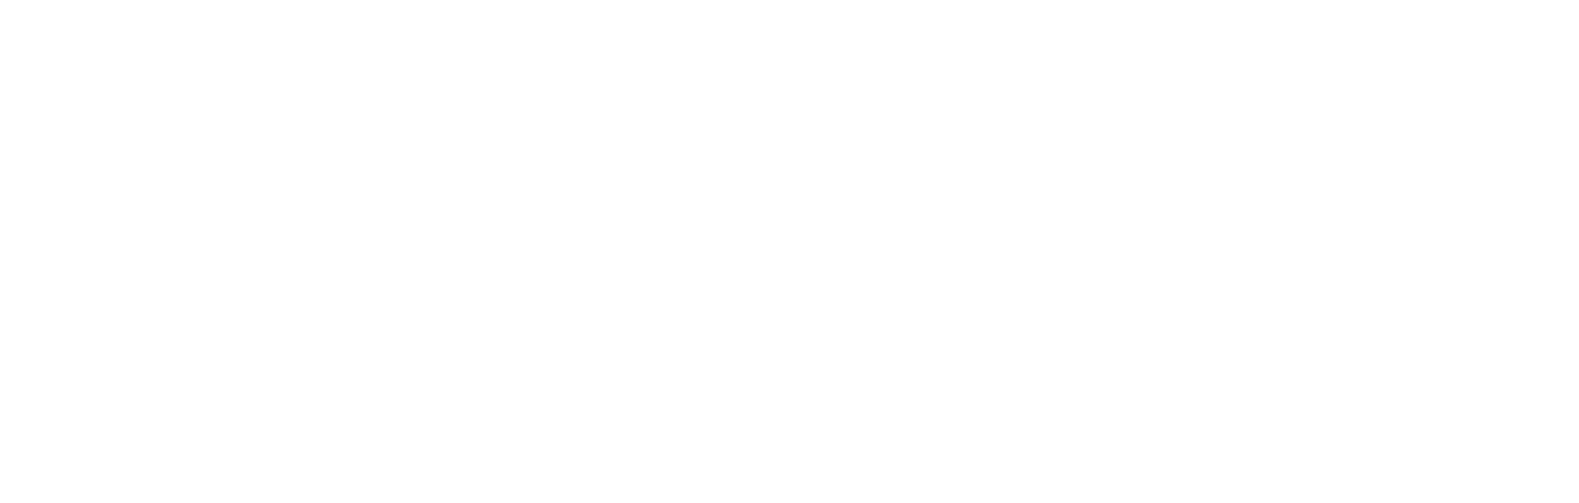 YOOZOO Interactive logo grand pour les fonds sombres (PNG transparent)